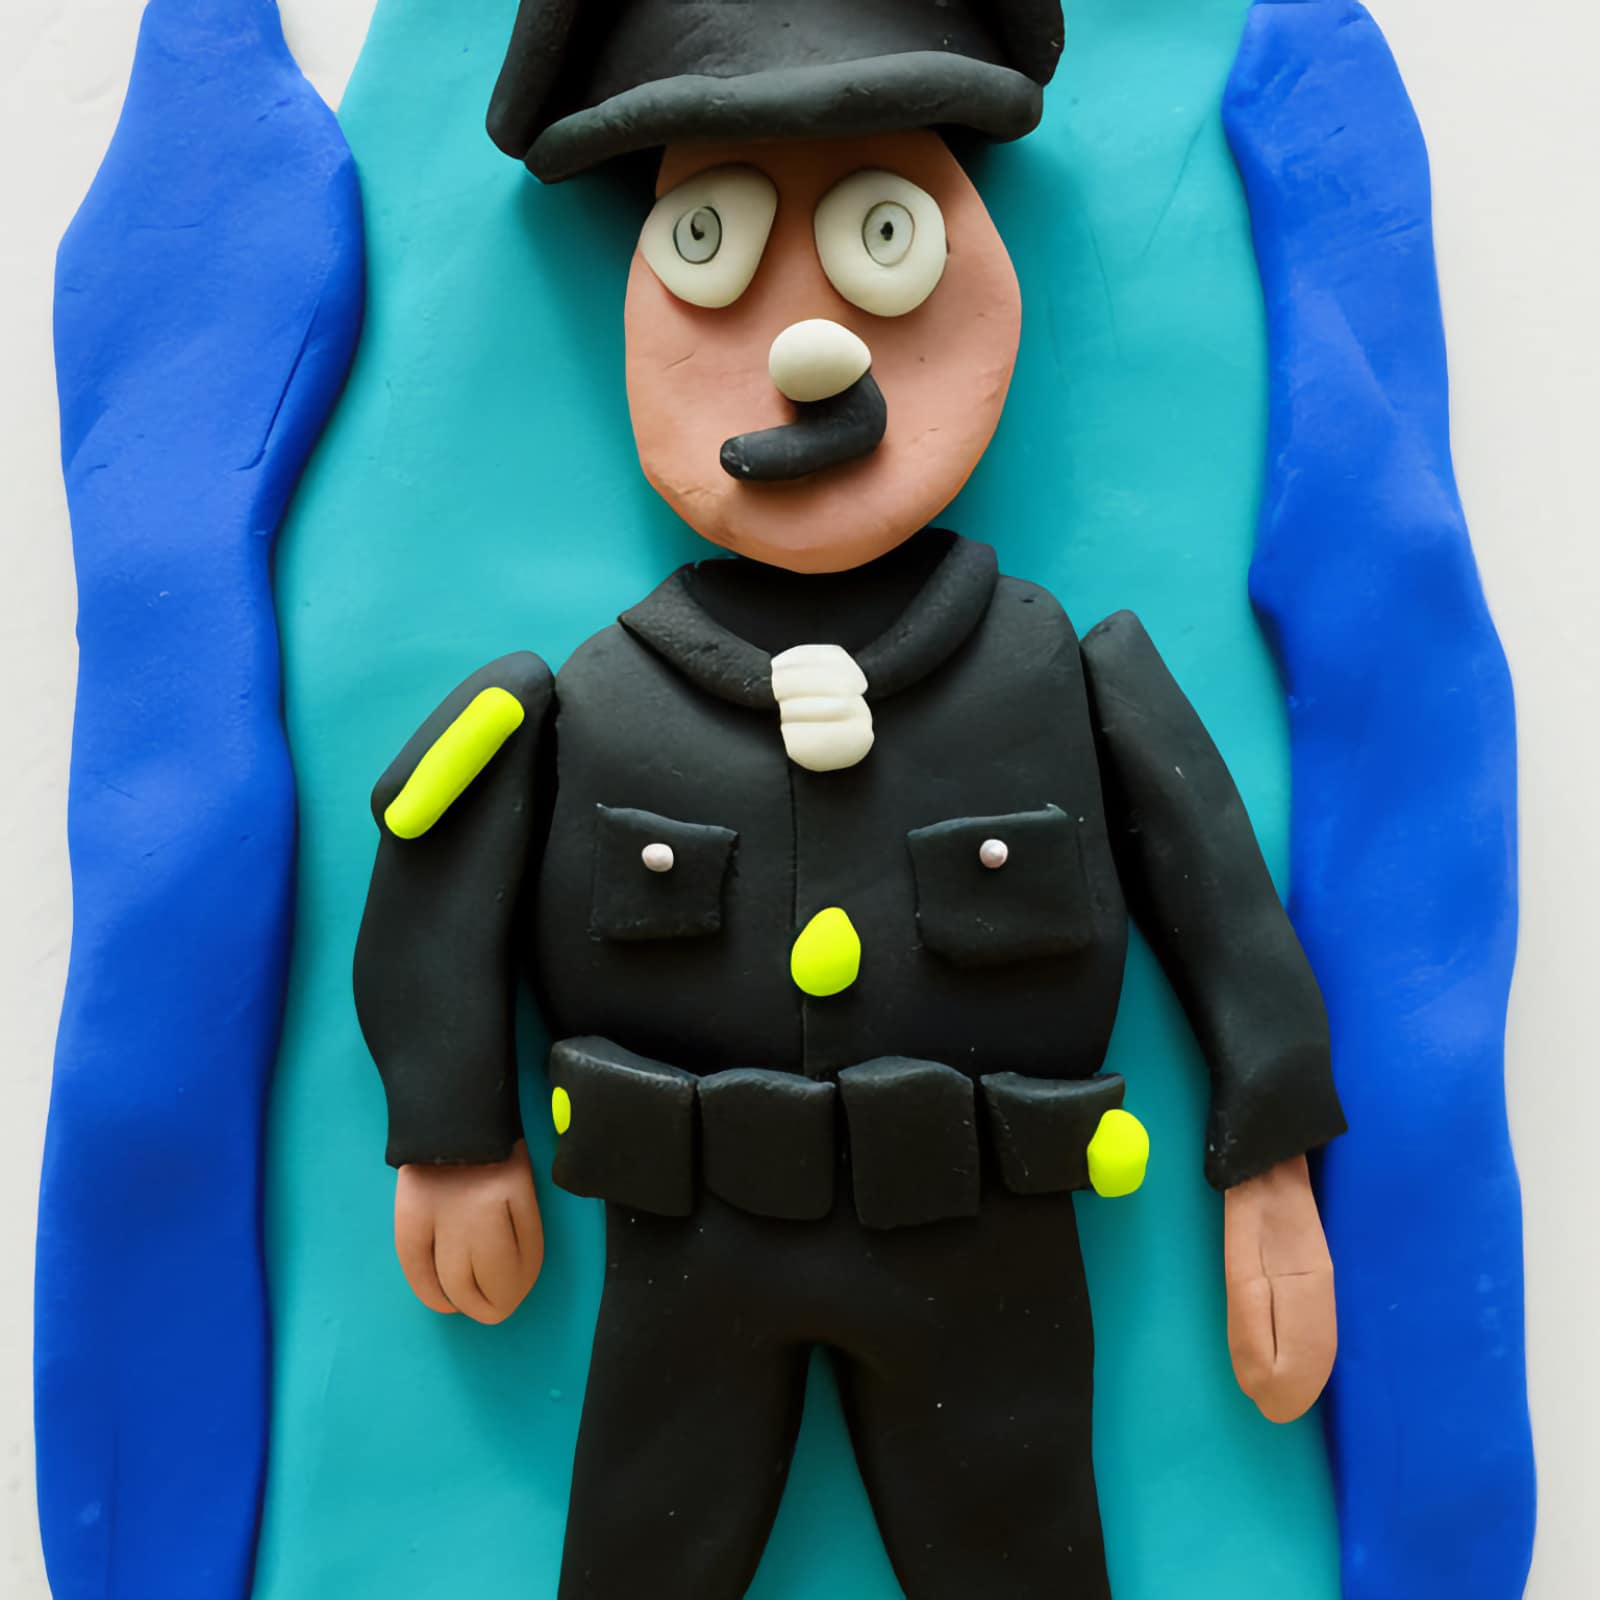 UK policeman in playdoh - AI